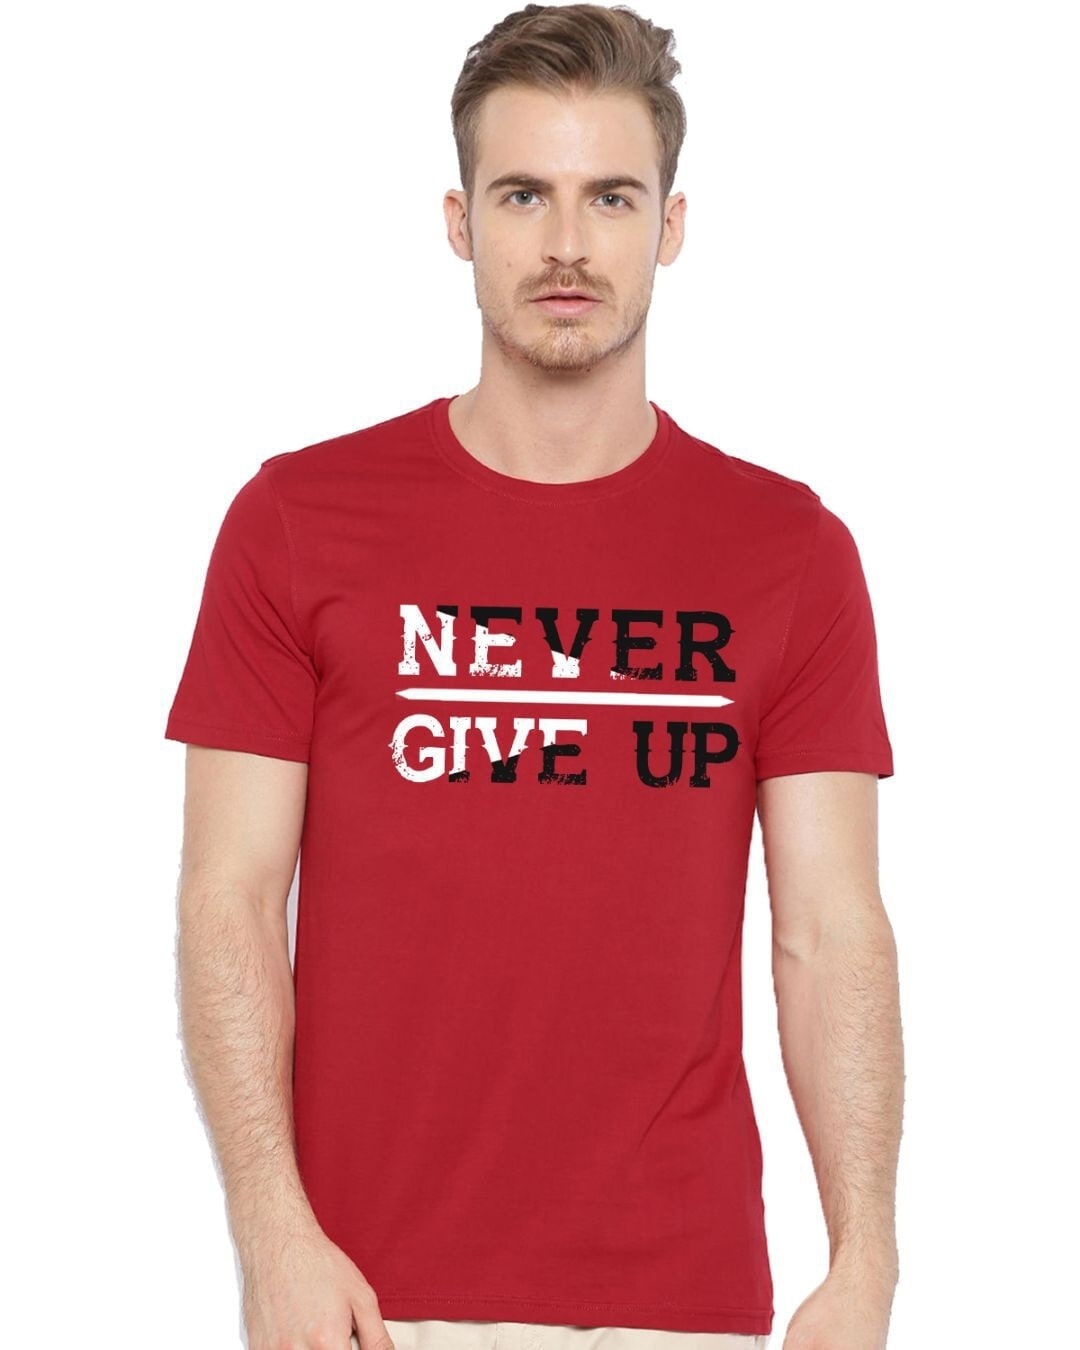 Shop Never Give Up Design Printed T-shirt for Men's